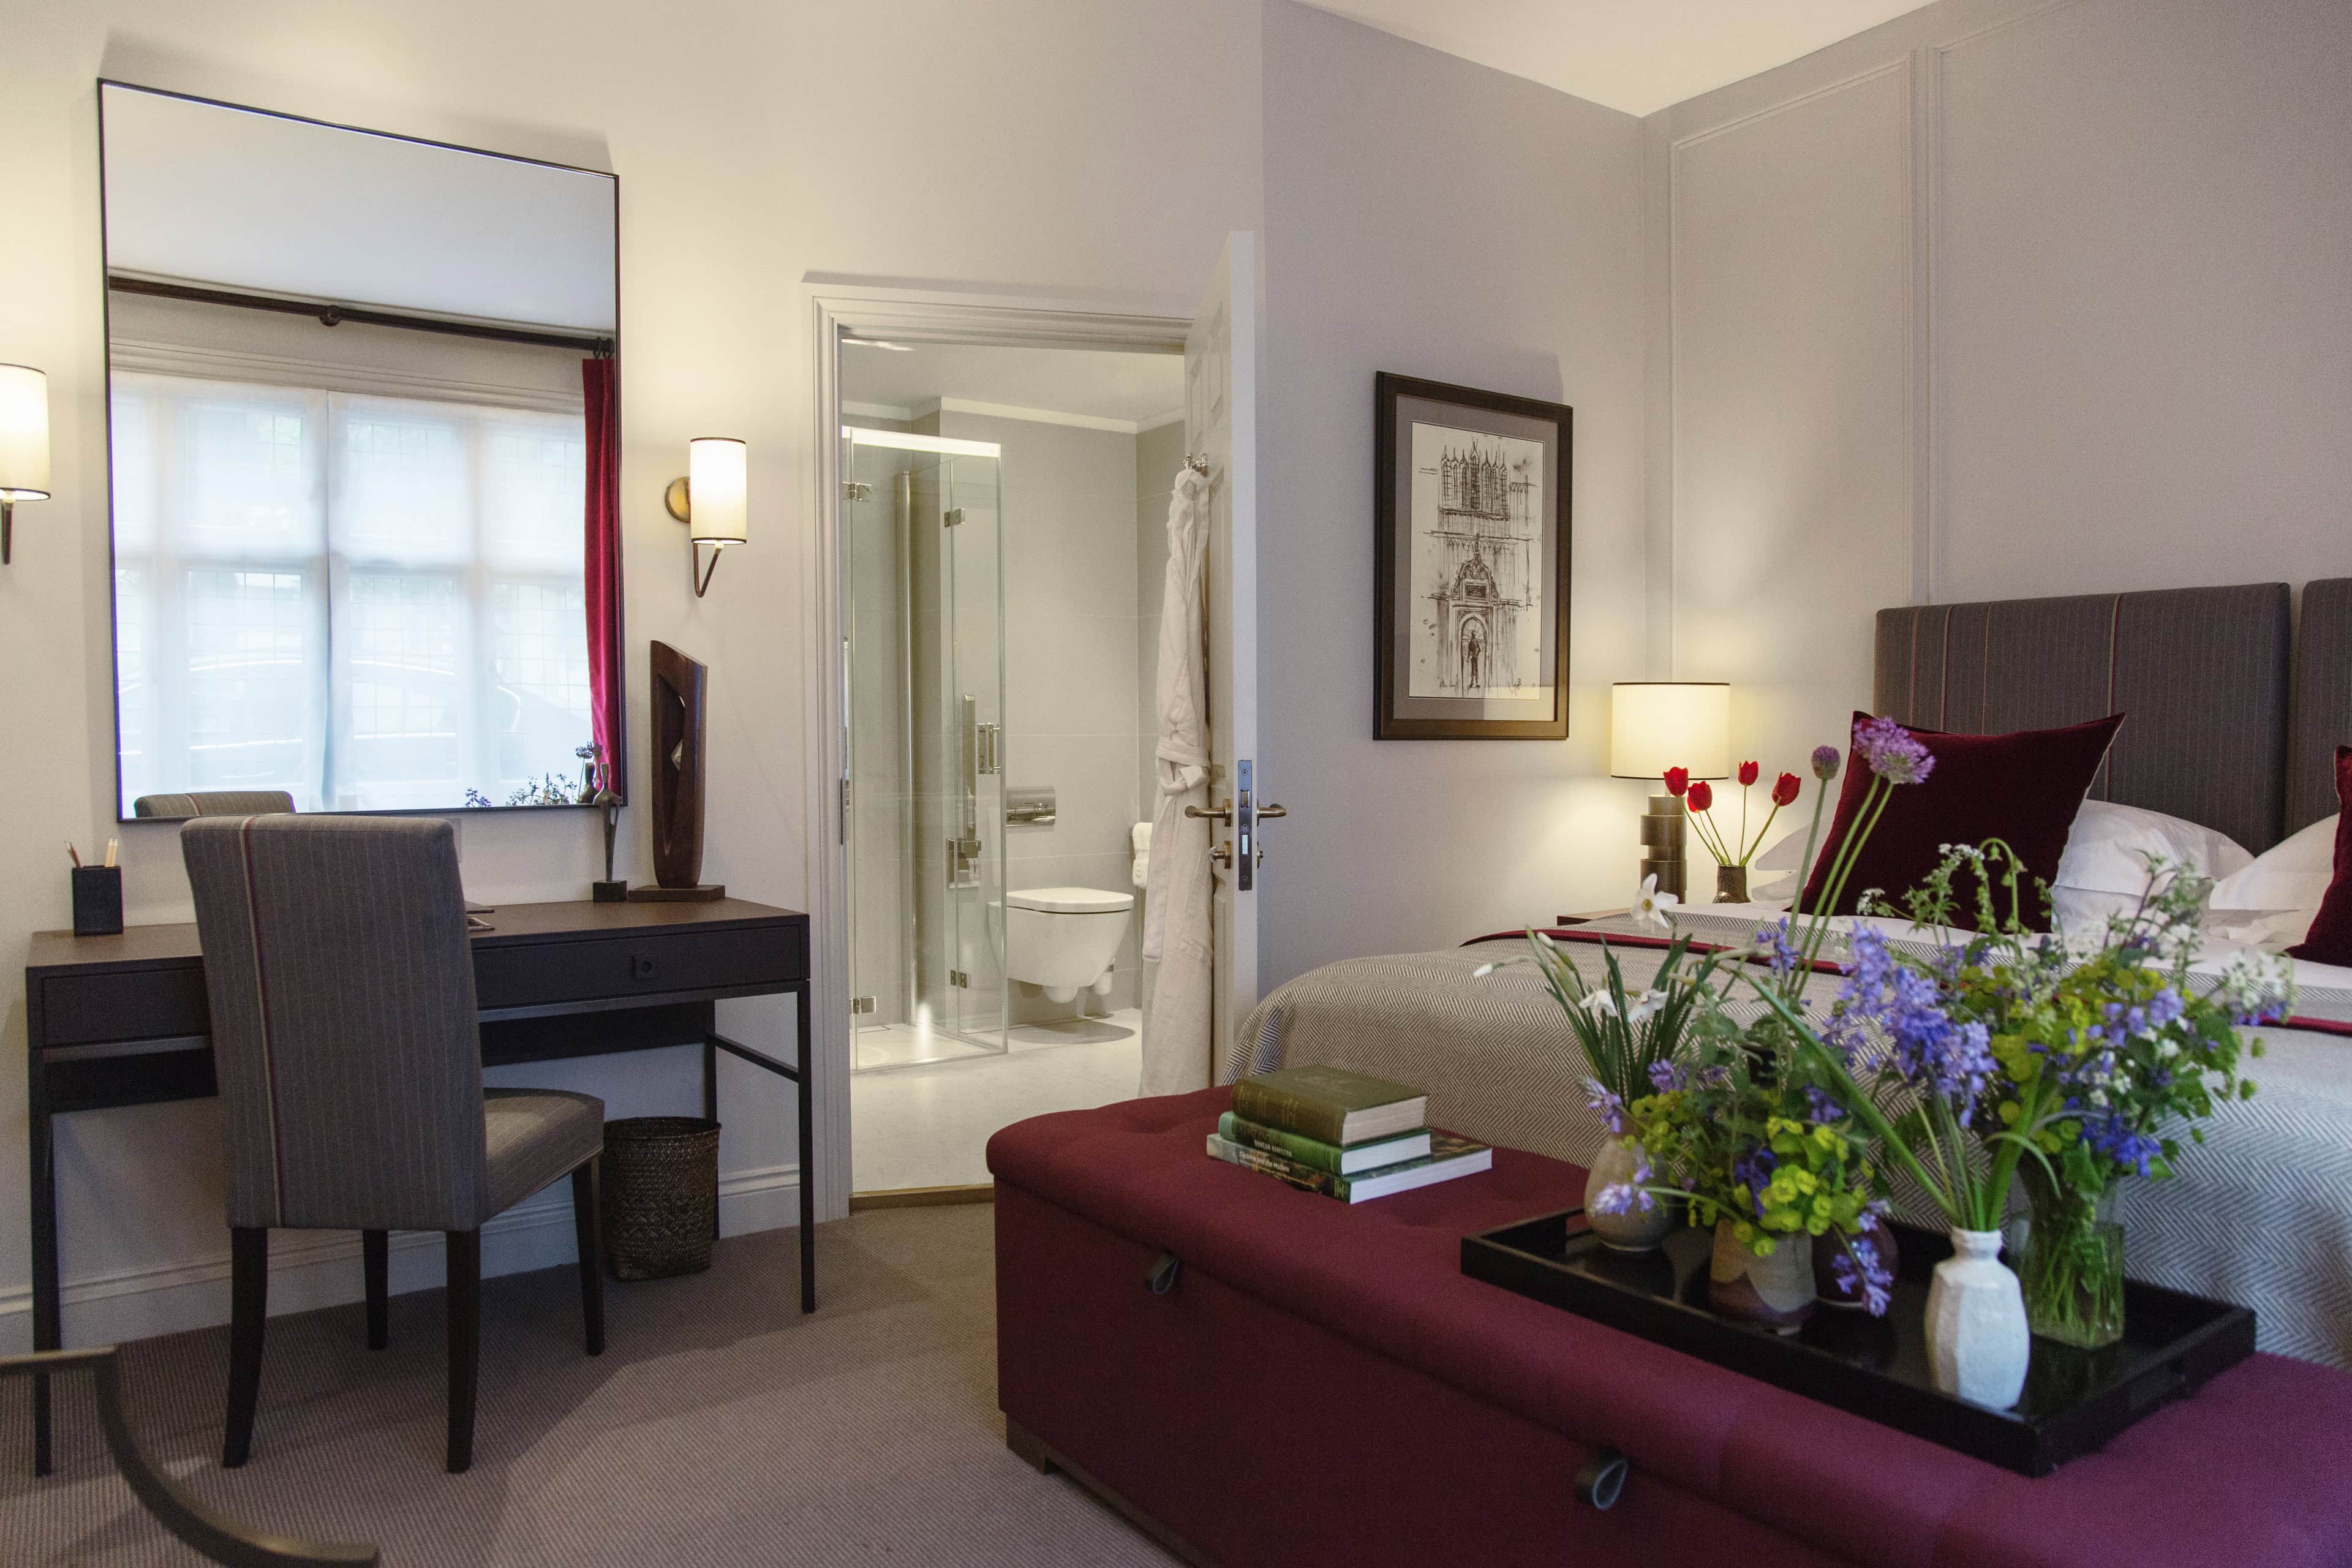 0007 - 2014 - Old Parsonage Hotel - Oxford - High Res - Bedroom Spring Flowers - Web Hero